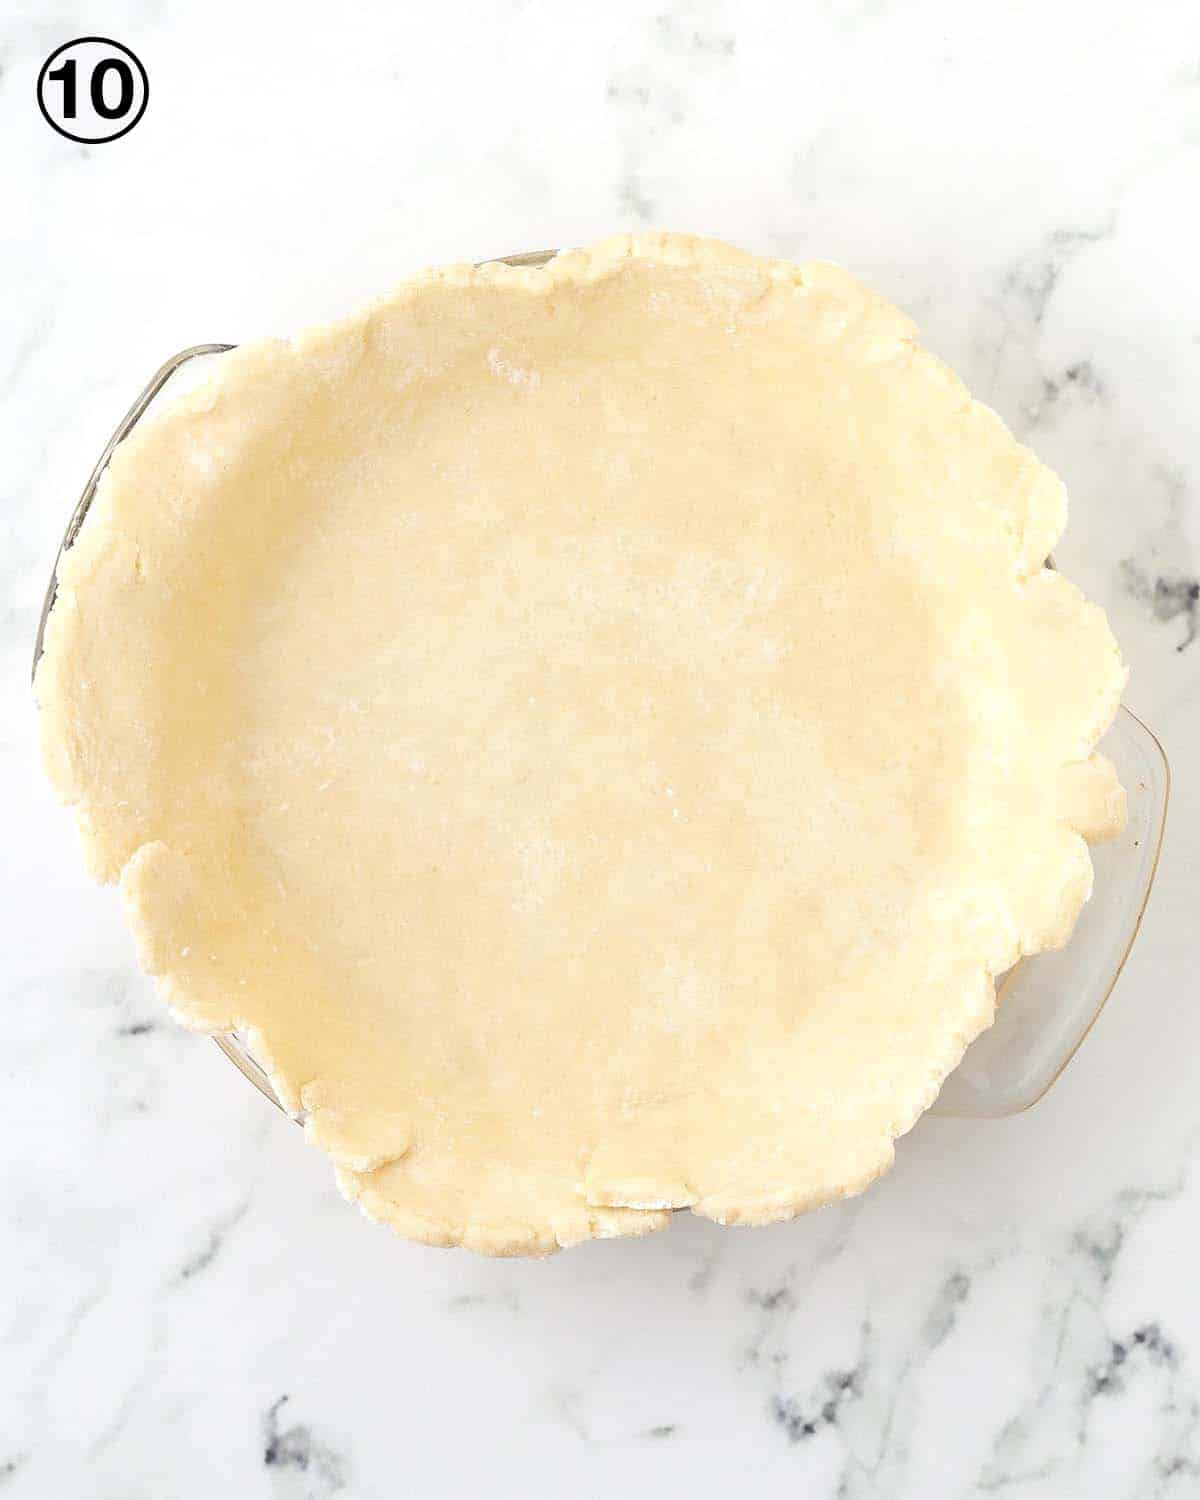 Raw, untrimmed pie dough in a glass pie dish.